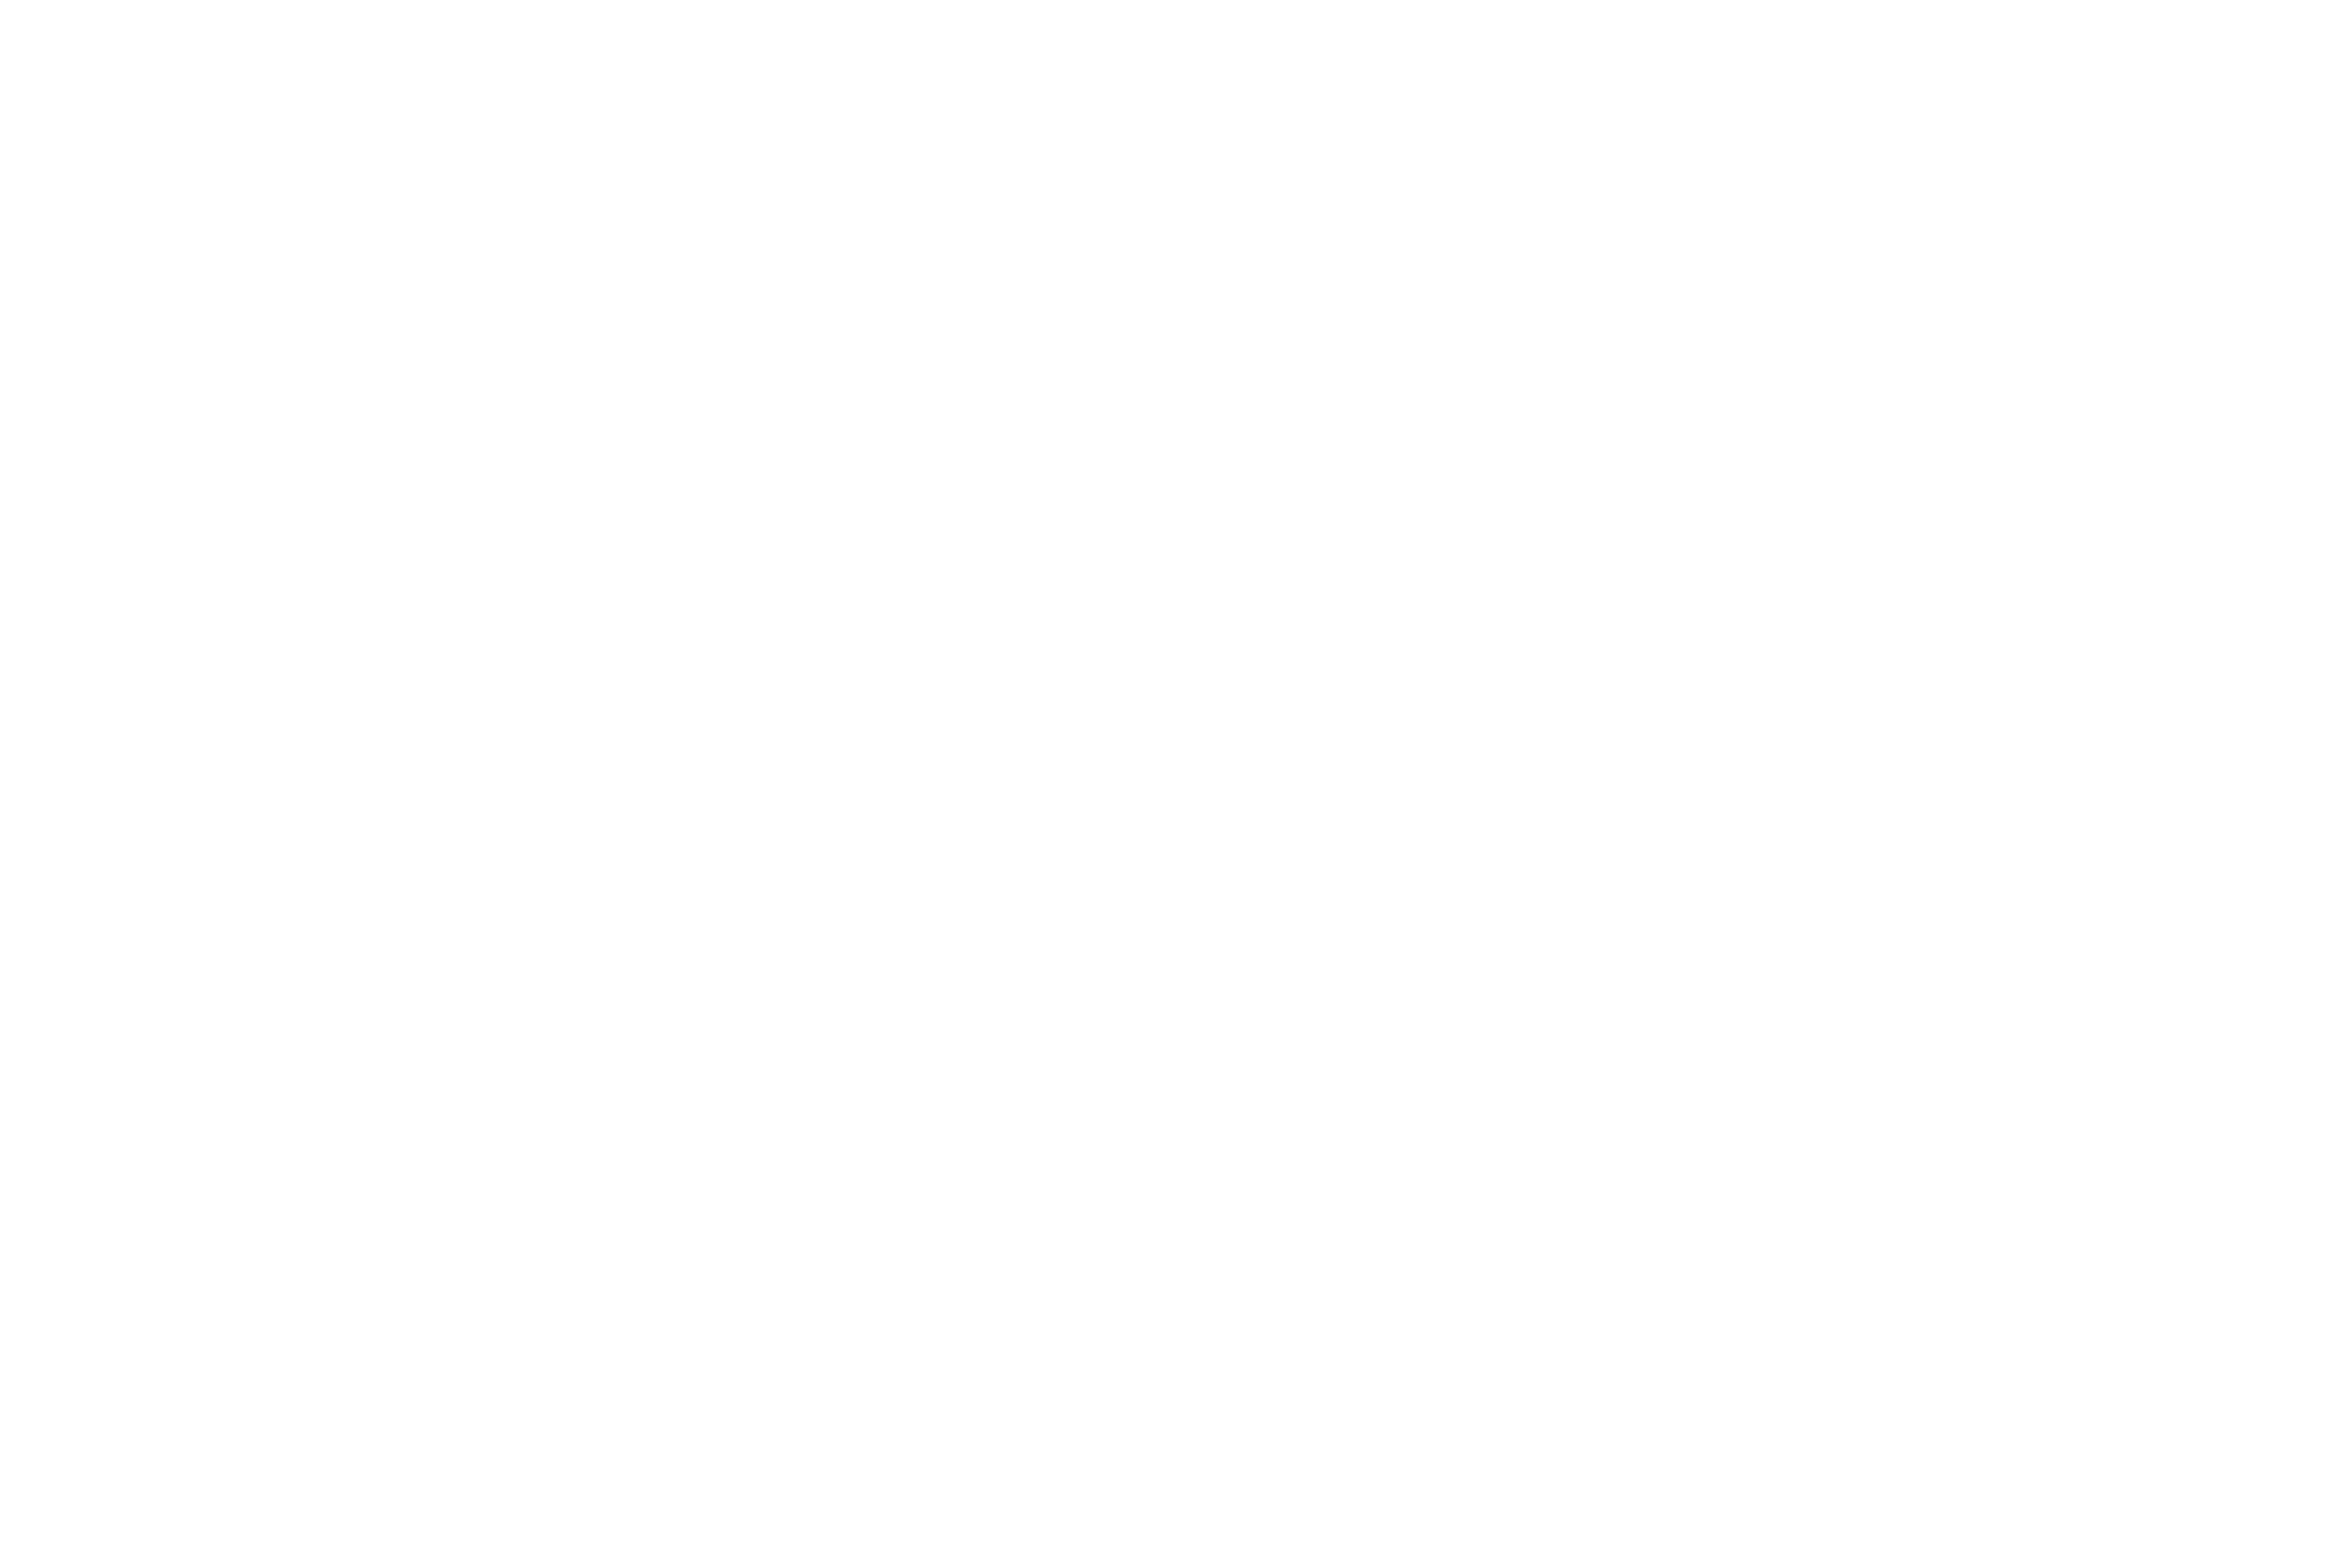 Horizon Software